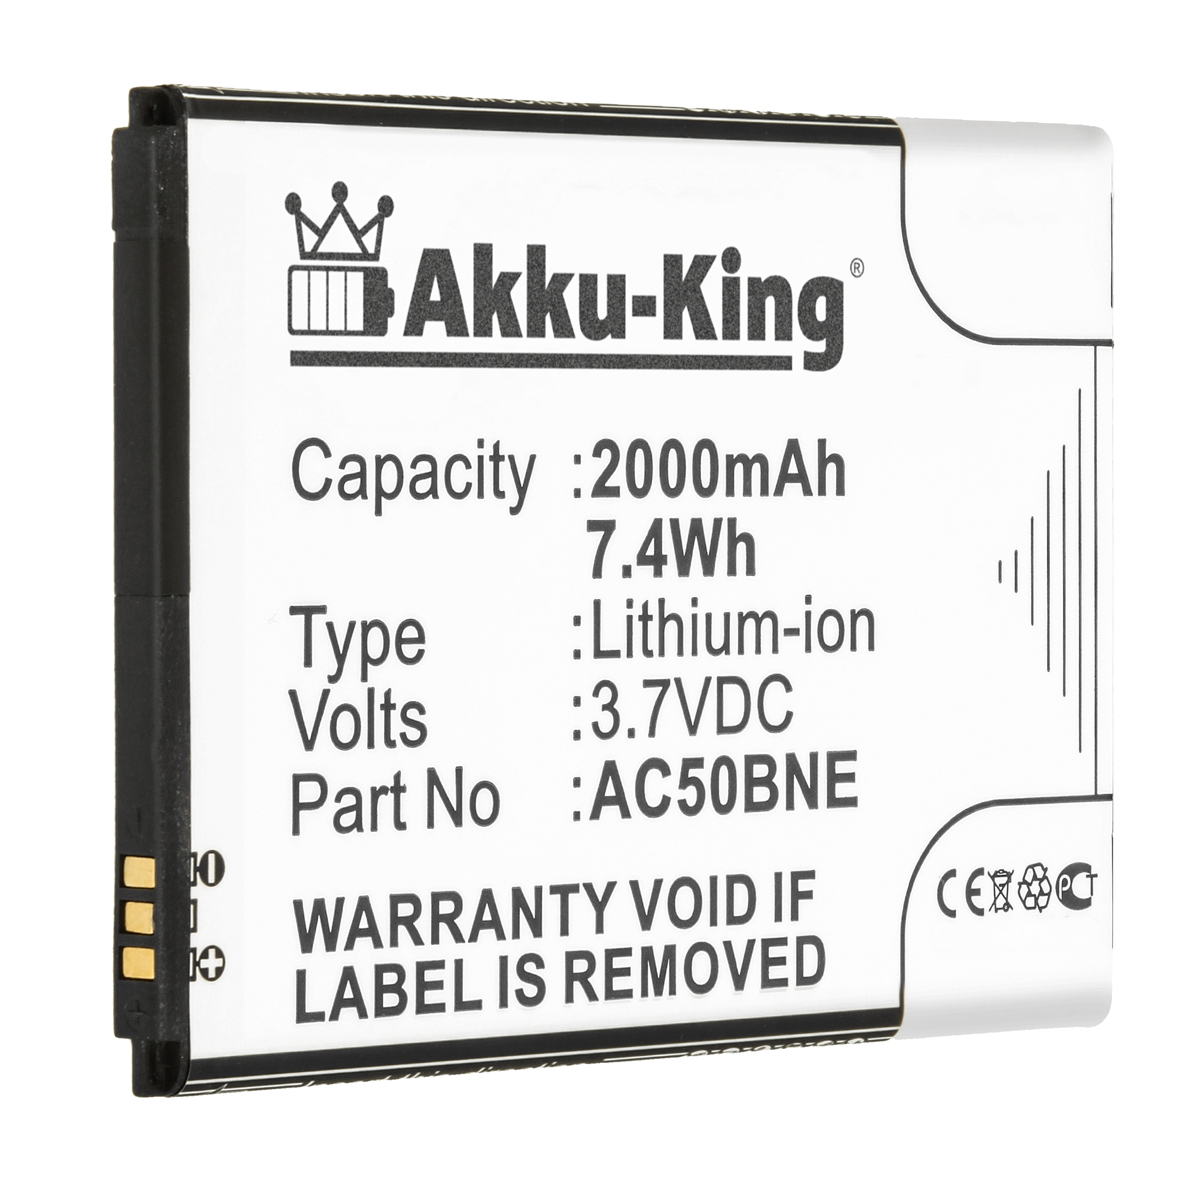 AKKU-KING Akku für Archos Li-Ion AC50BNE 3.7 2000mAh Handy-Akku, Volt